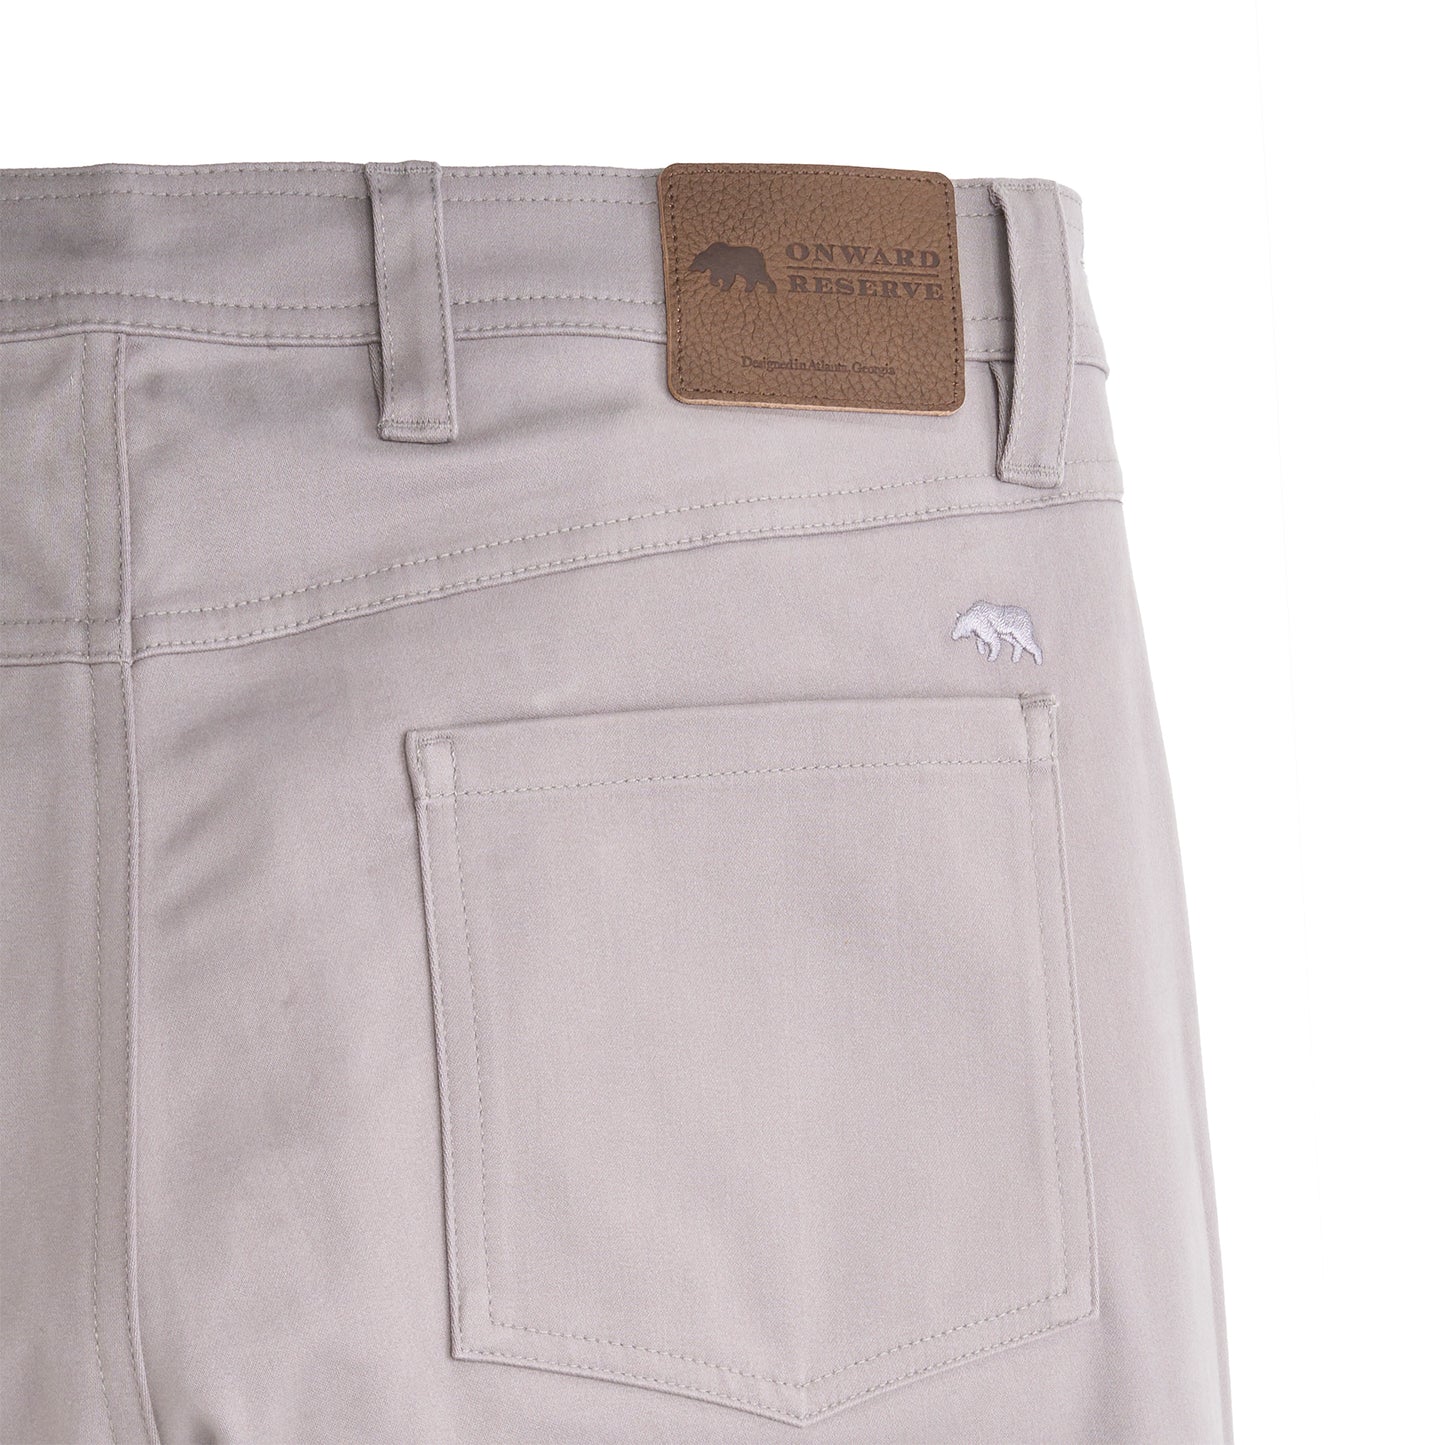 Classic Five Pocket Pant Steel Grey